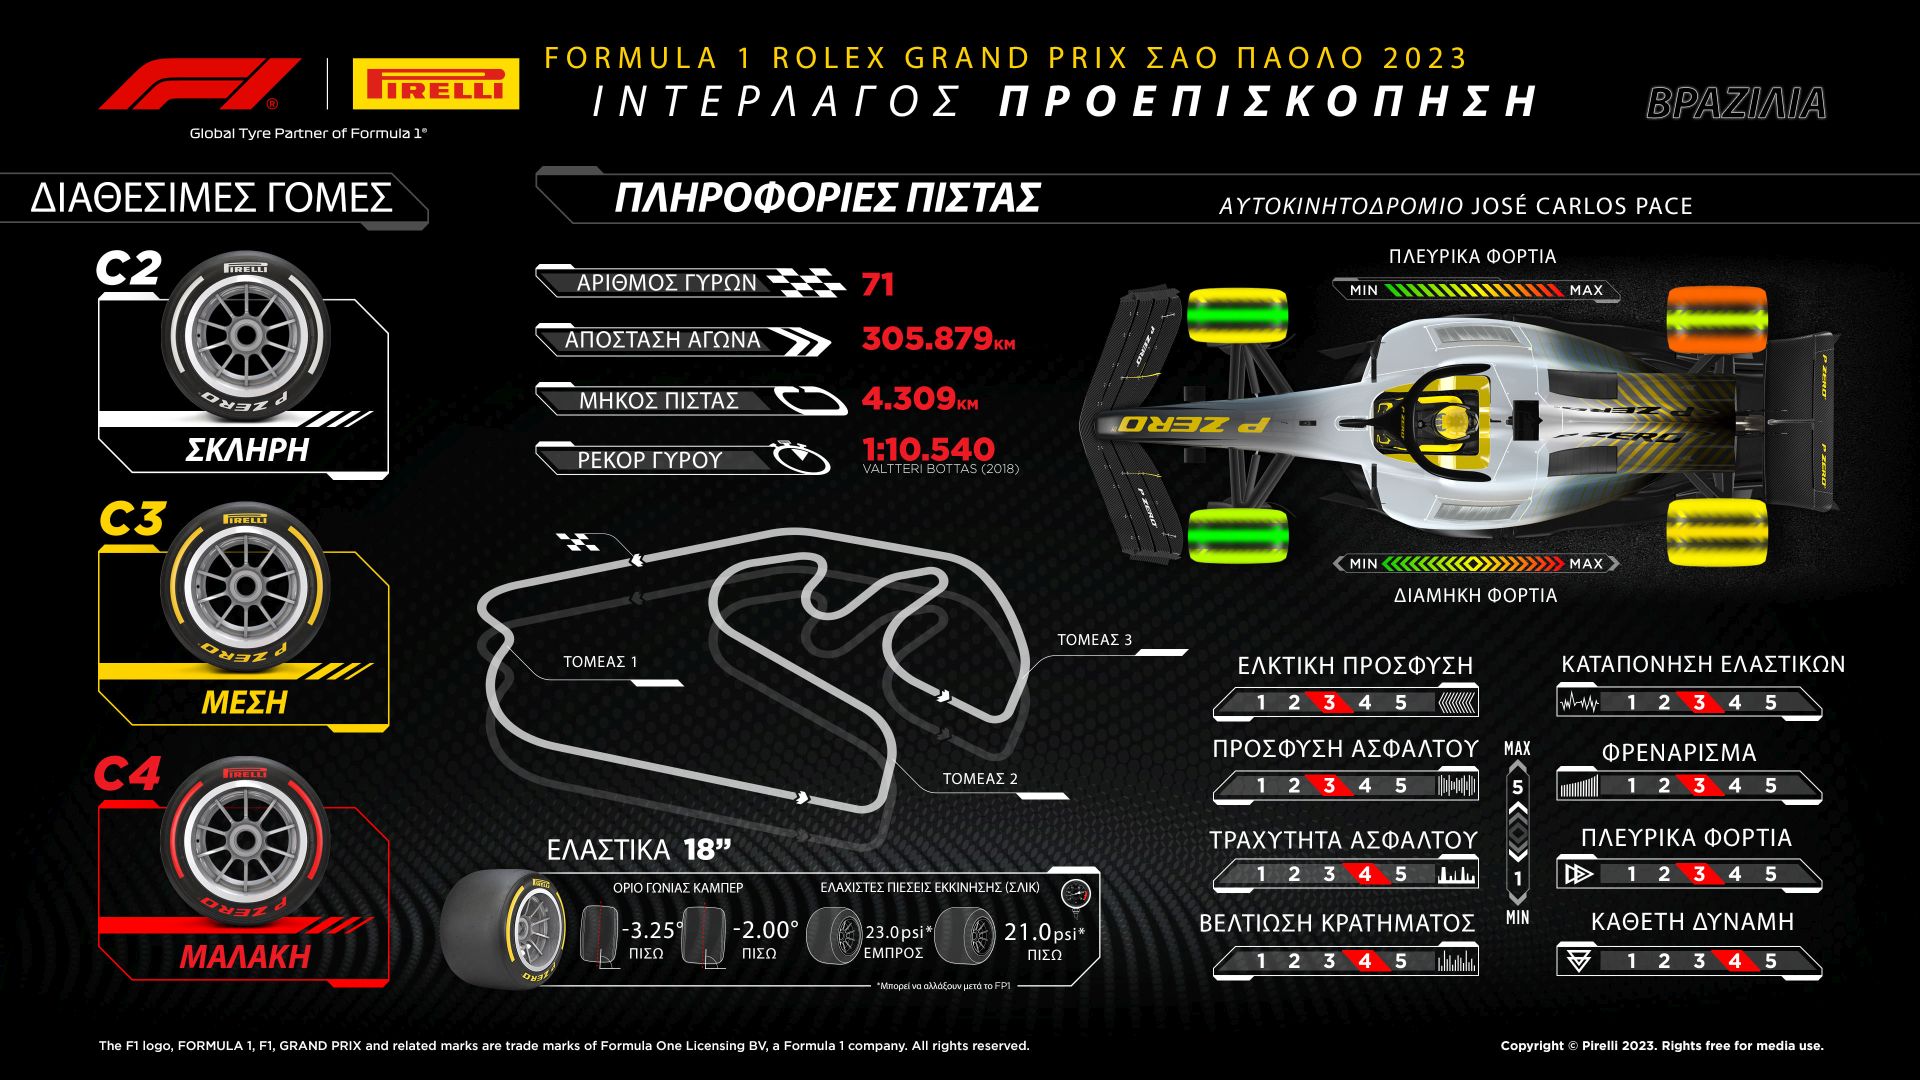 To preview της Pirelli για το GP Βραζιλίας